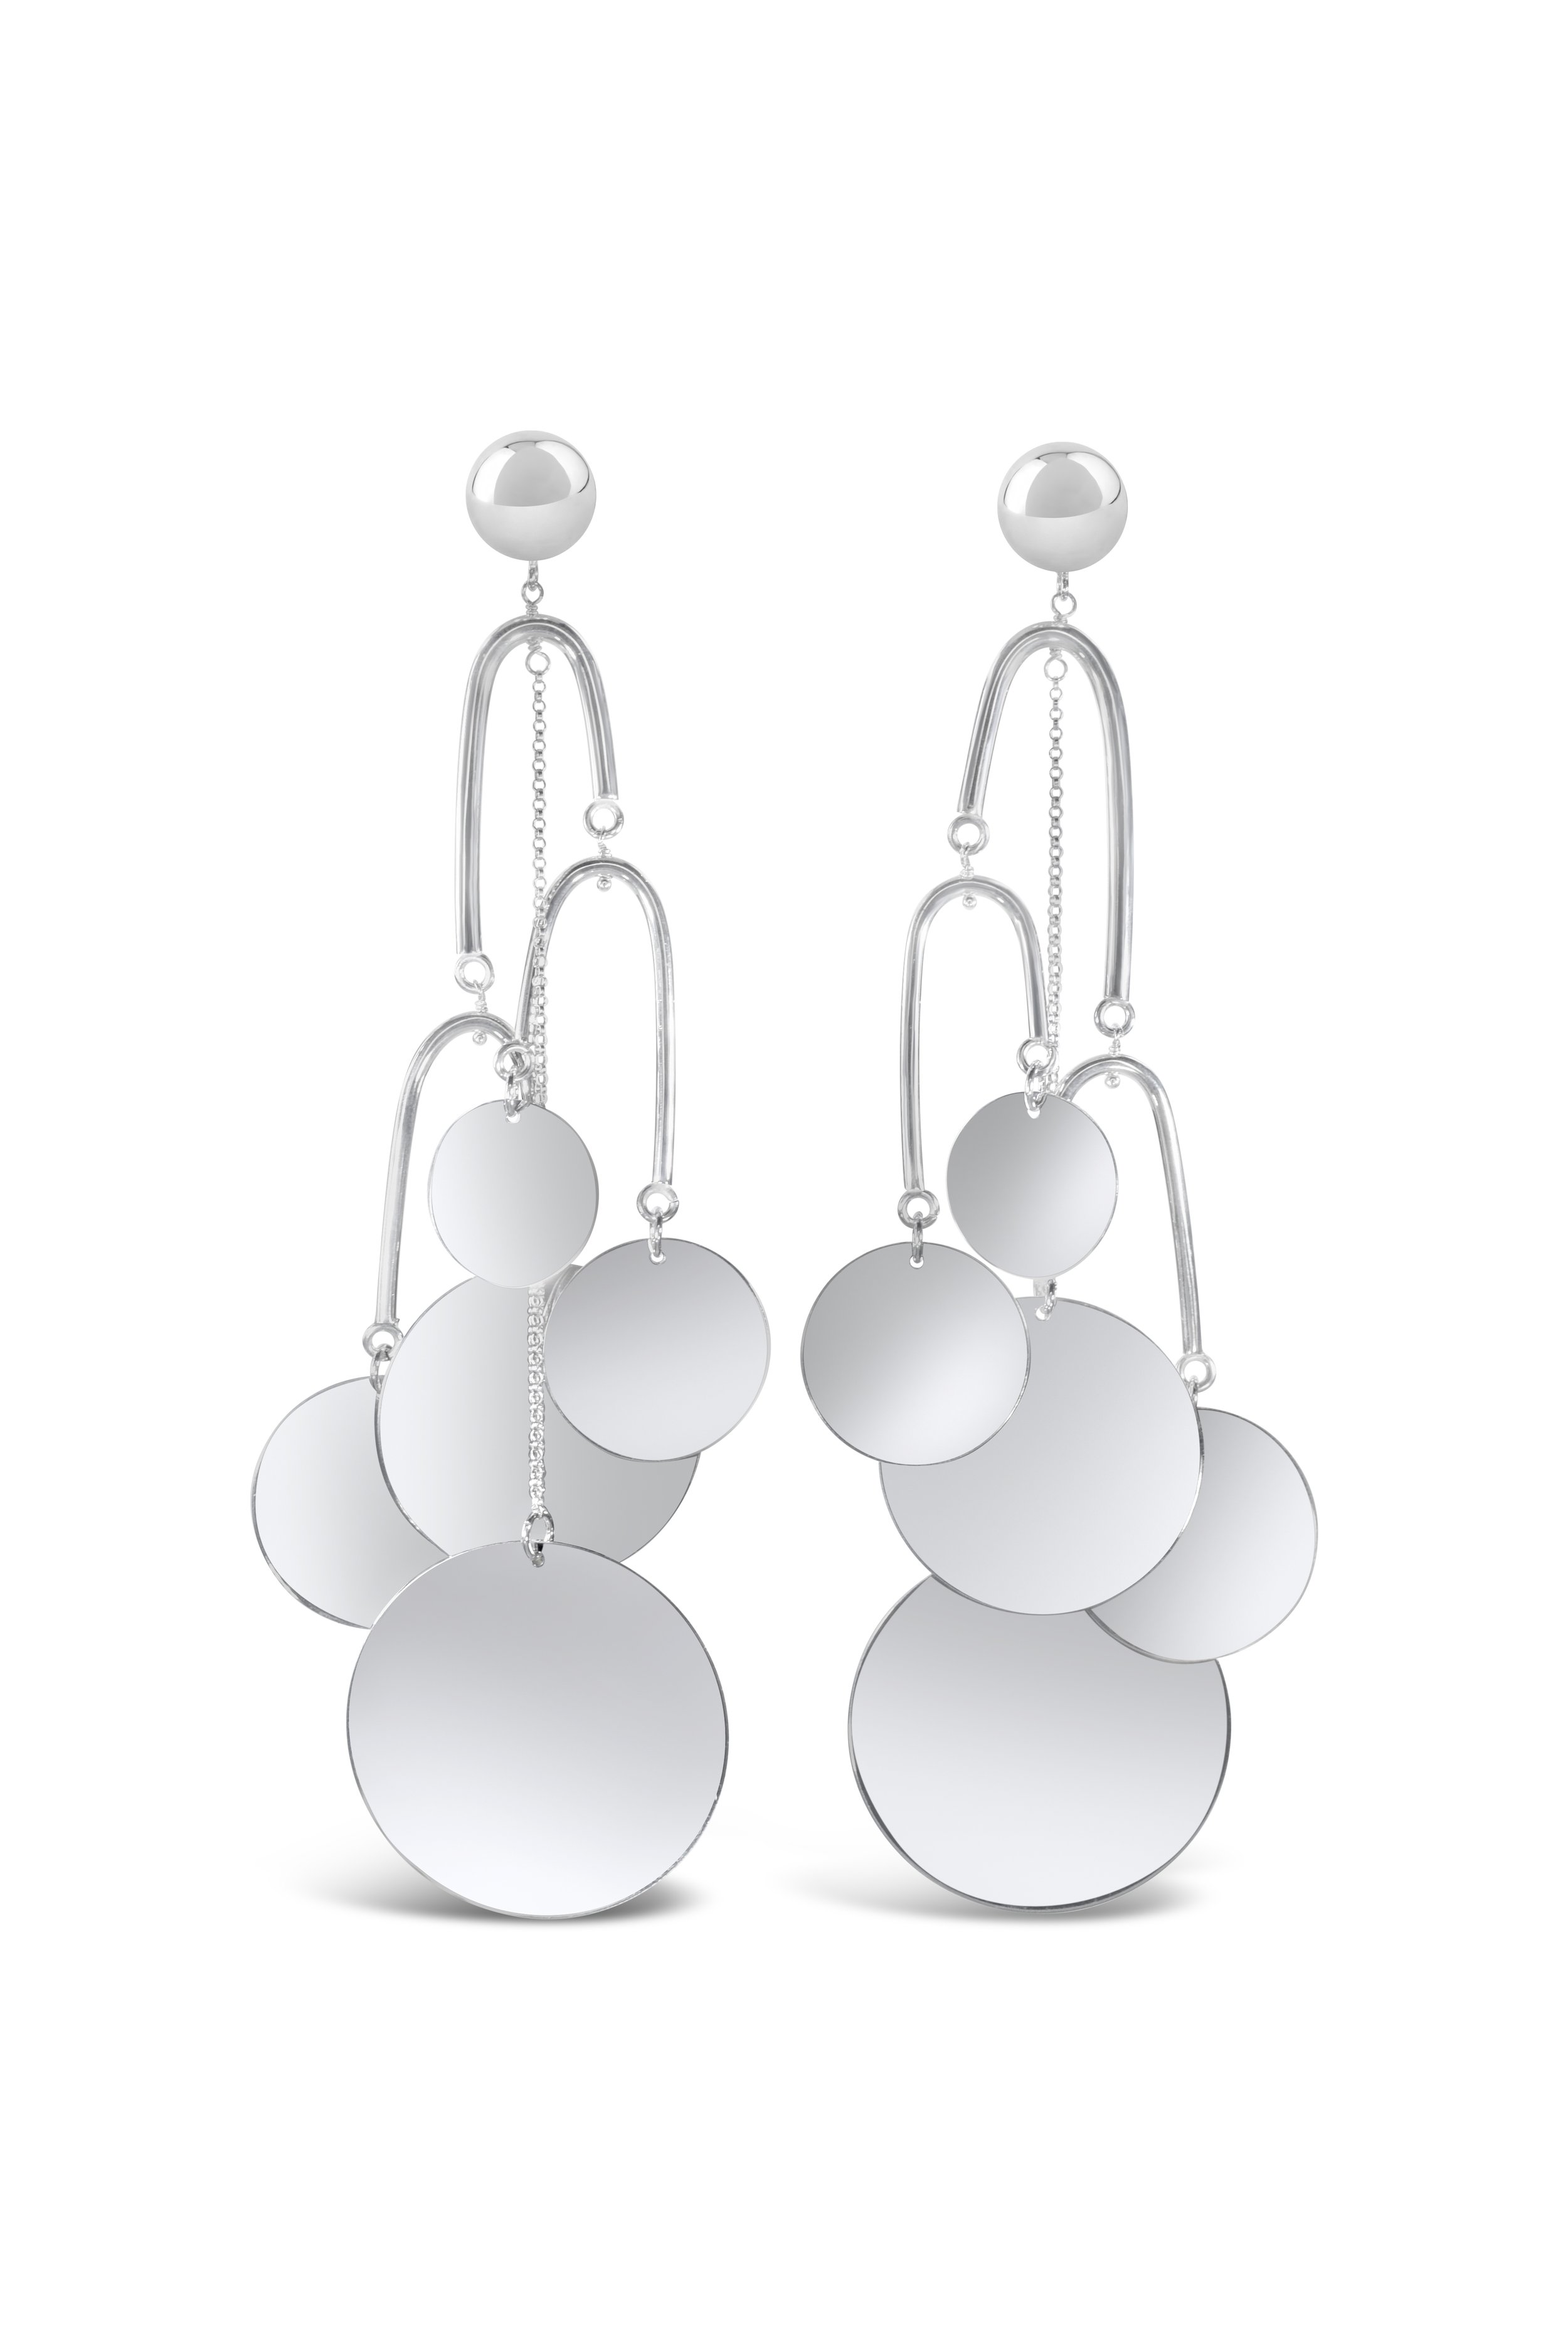 Sterling silver mobile earrings